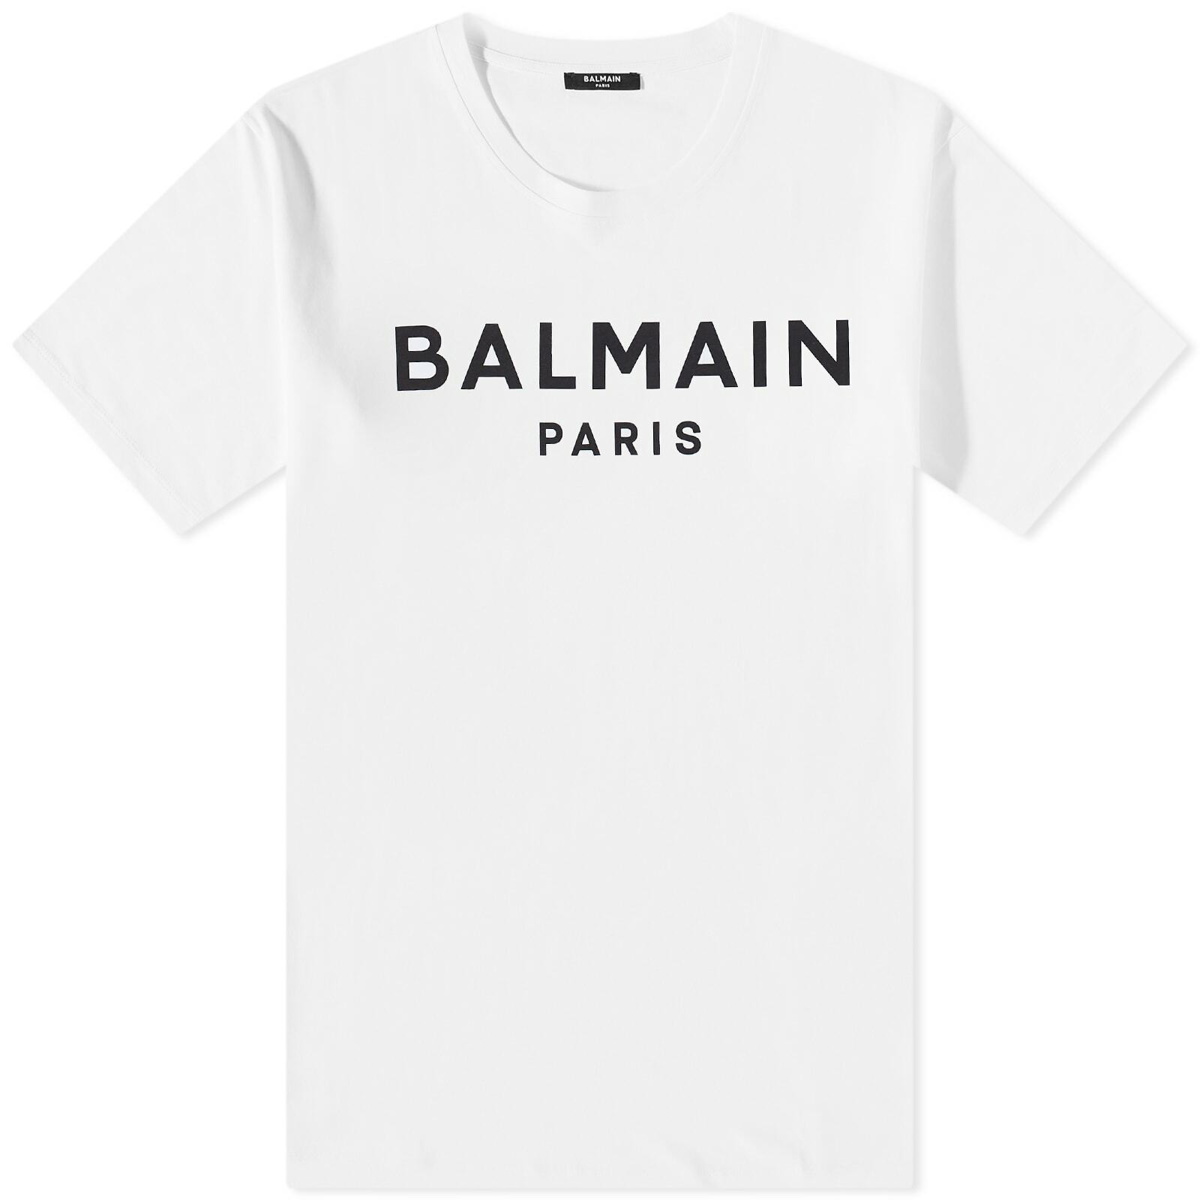 Balmain Men's Paris Logo T-Shirt in White/Black Balmain